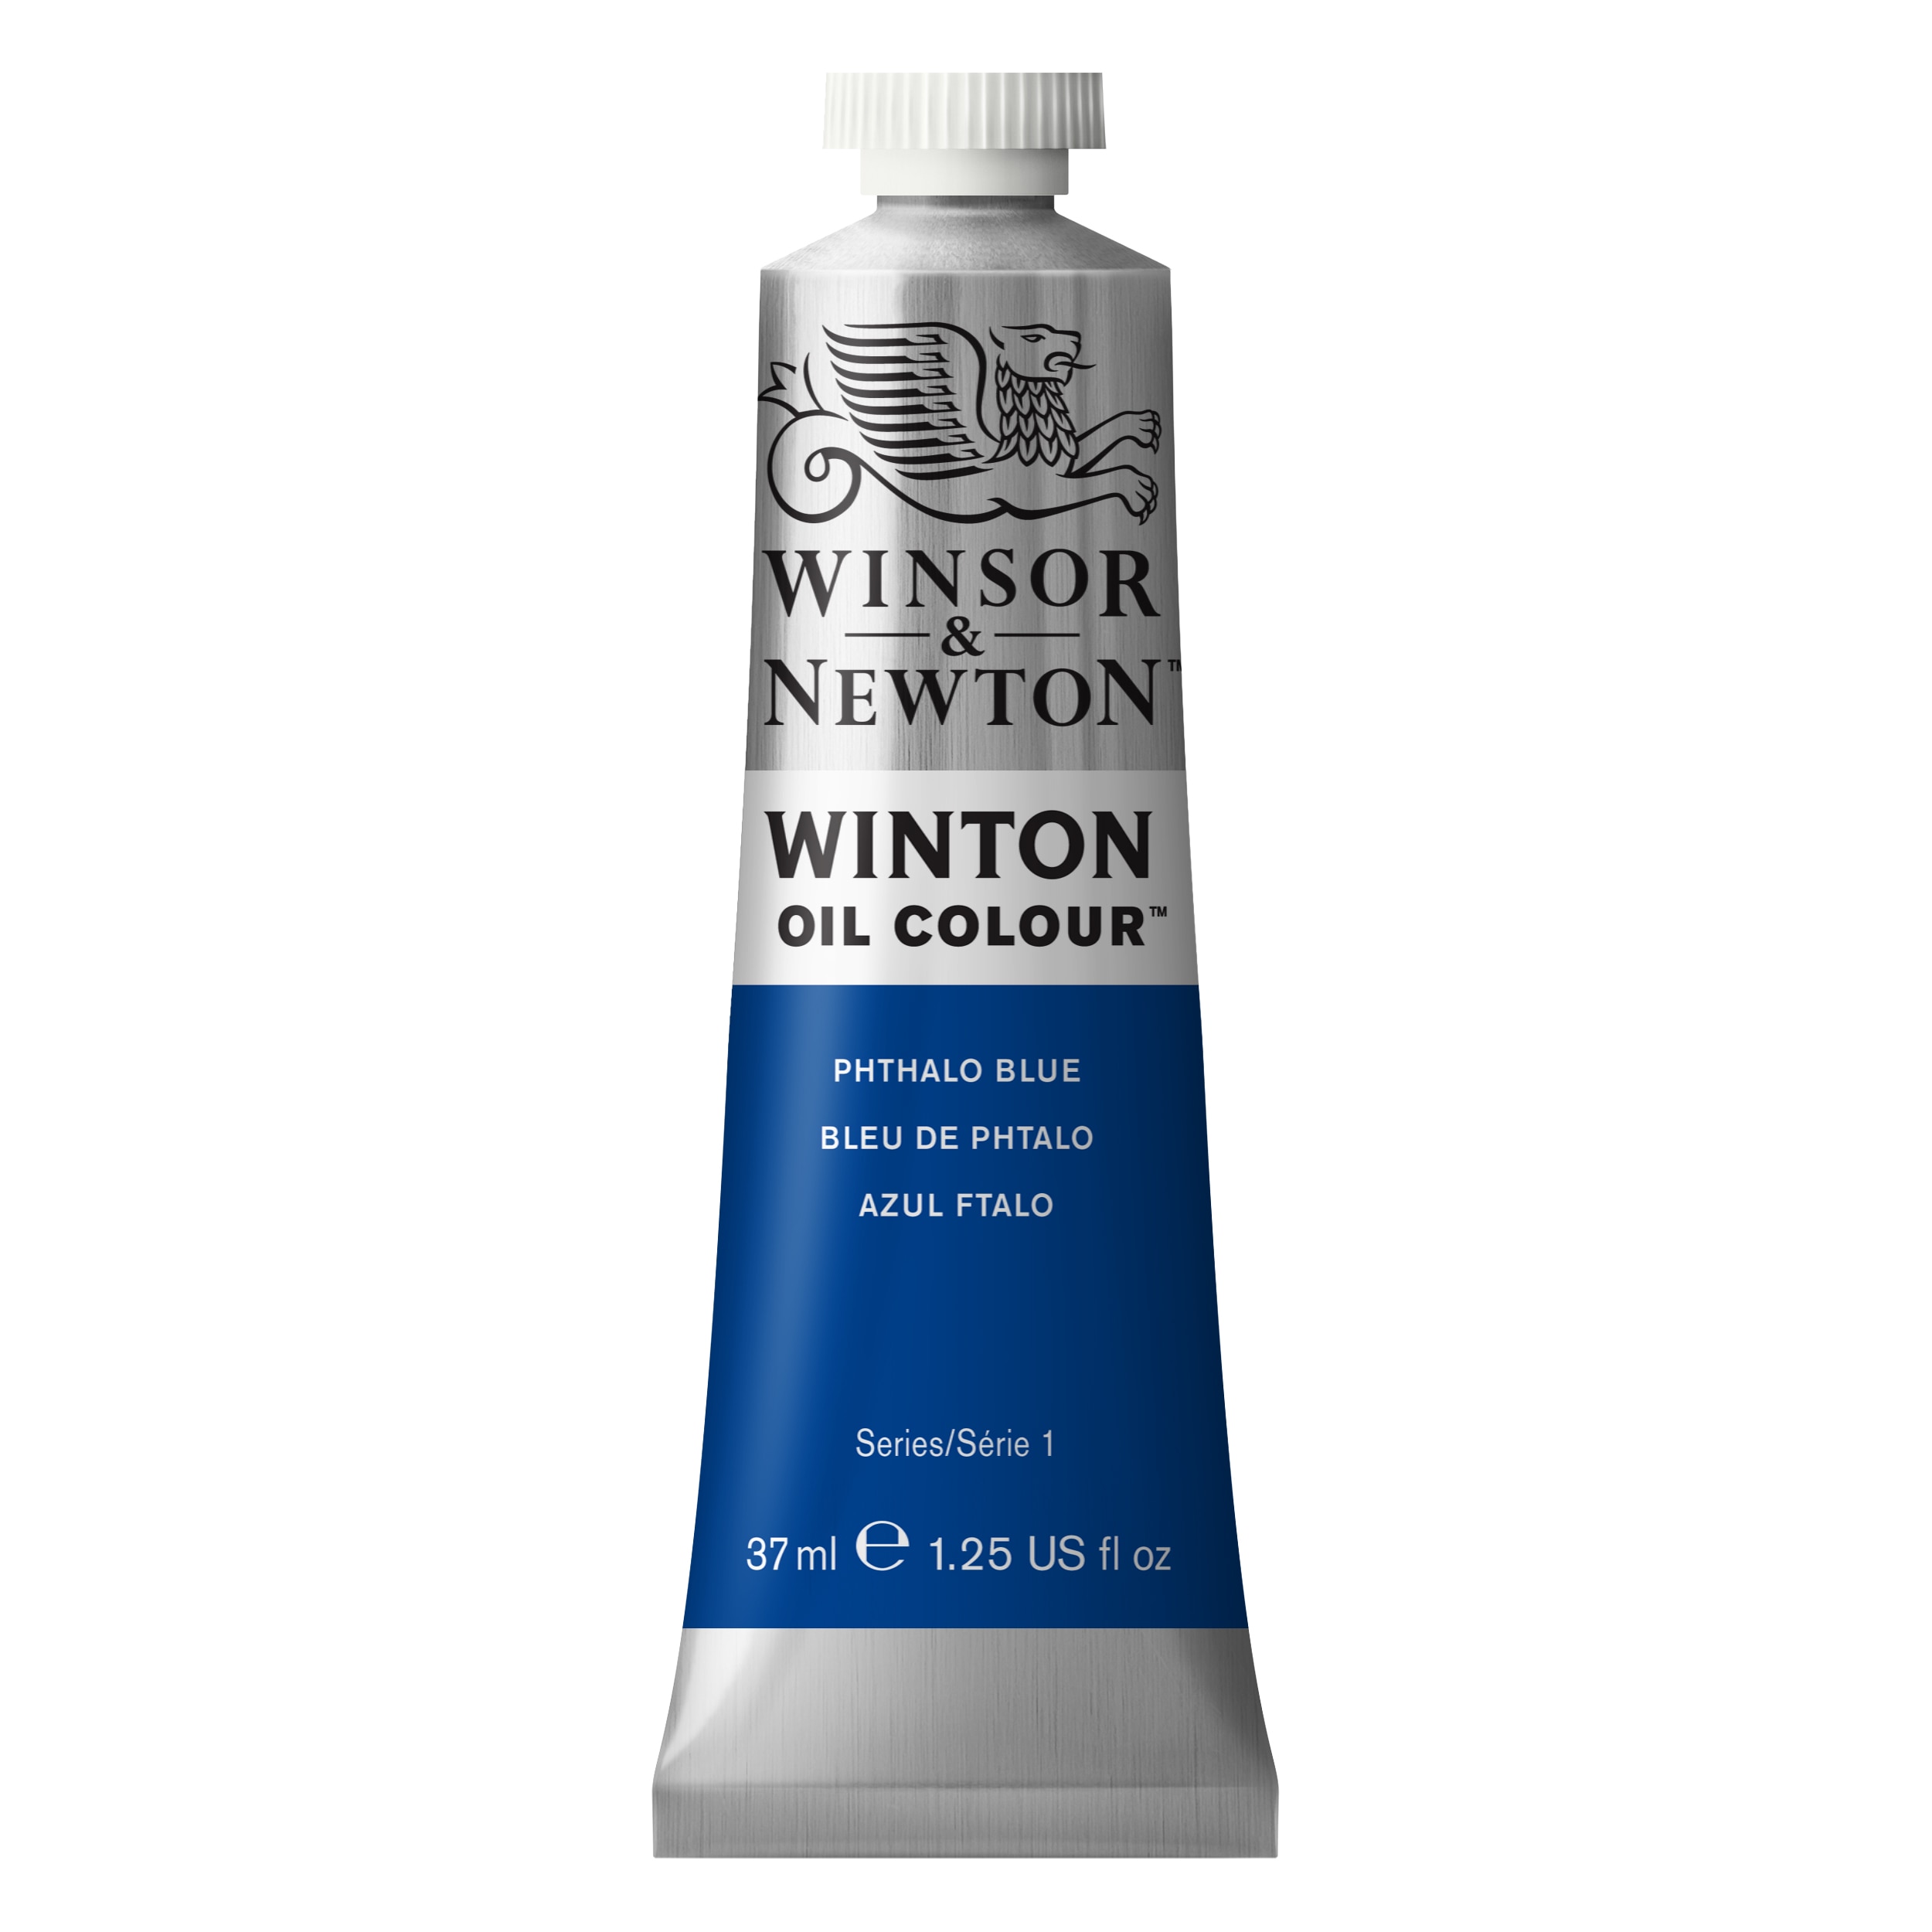 Winsor & Newton Winton Oil Color, 37ml, Pthalo Blue